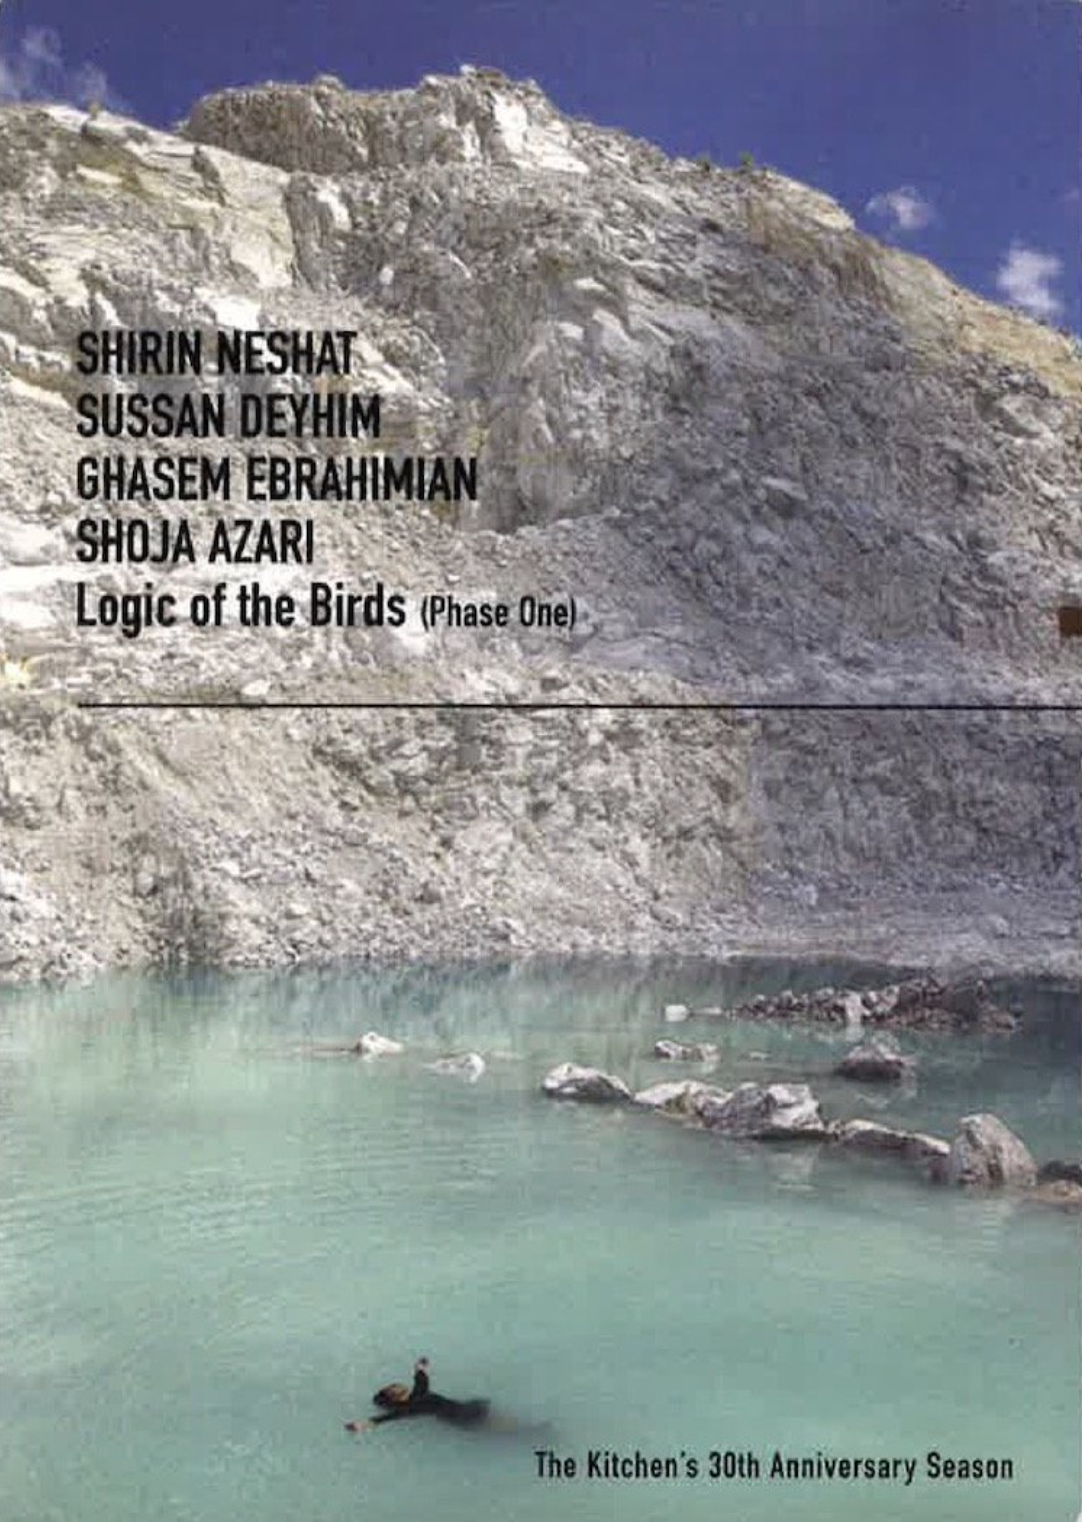 Postcard for Shirin Neshat, Sussan Deyhim, Ghasem Ebrahimian, and Shoja Azari, Logic of the Birds, October 5–16, 2001 at The Kitchen. Front